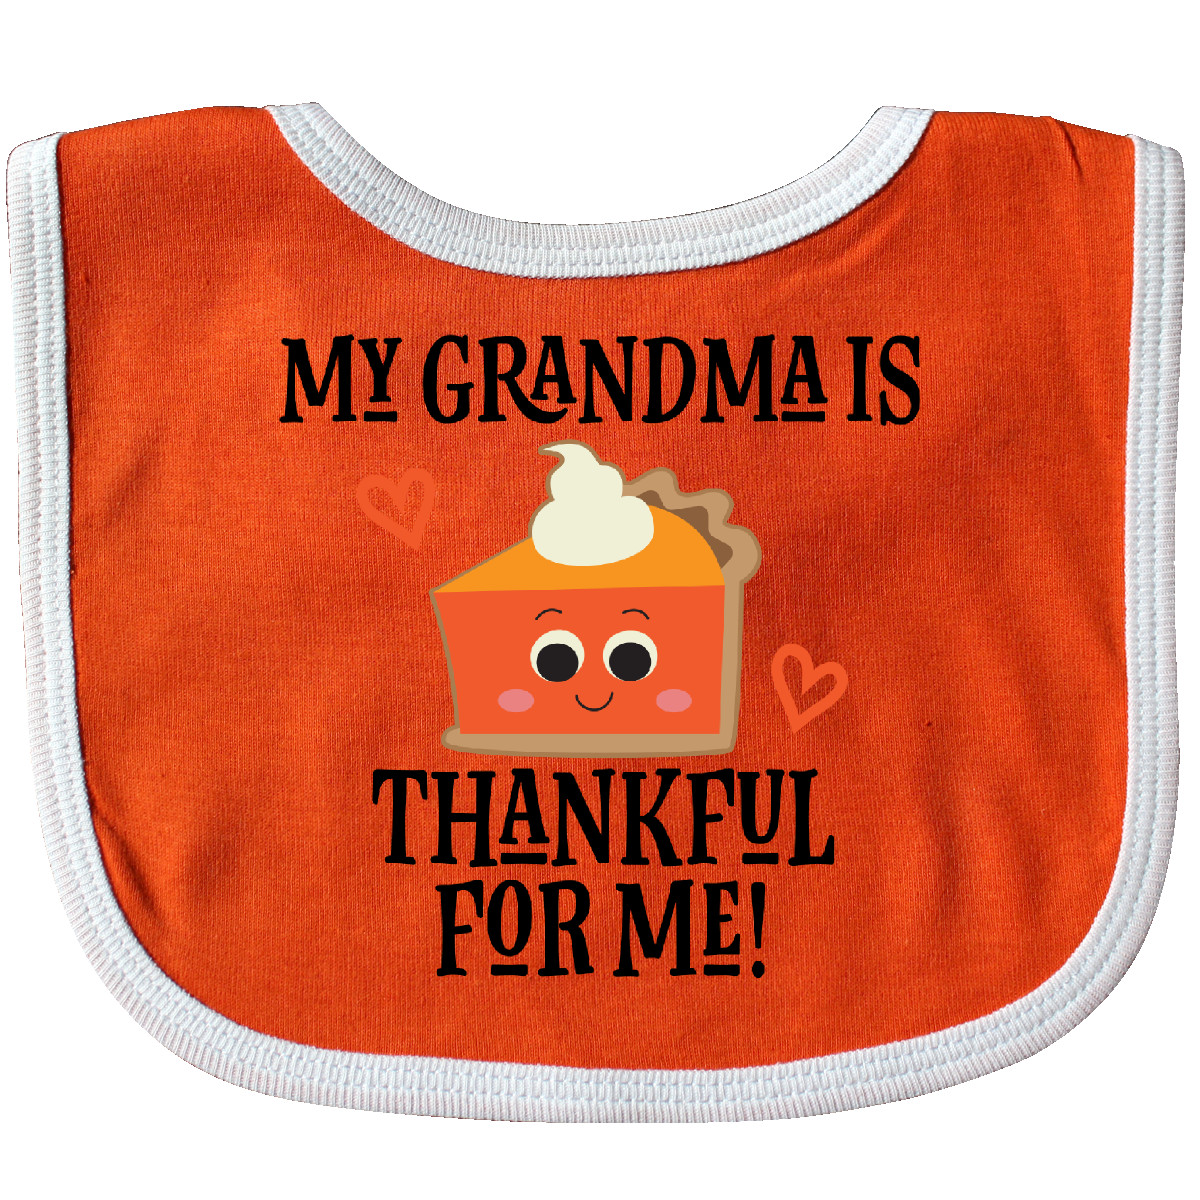 Thanksgiving Quotes Baby
 Thanksgiving Grandma Thankful for Me Baby Baby Bib Orange